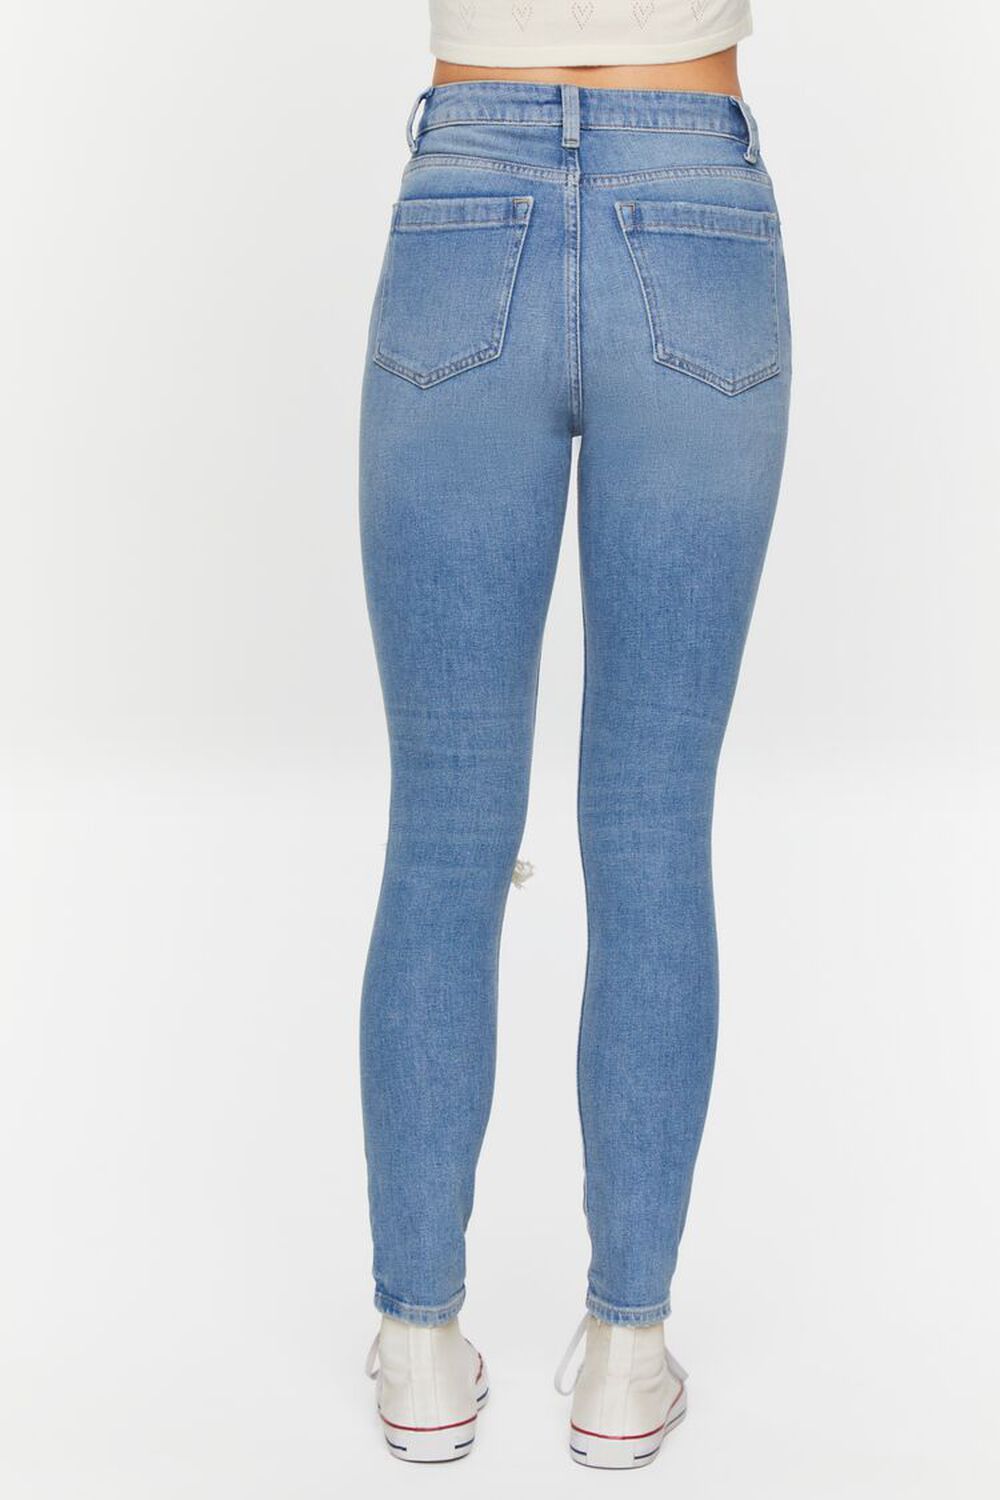 MEDIUM DENIM Hemp 10% Skinny Jeans, image 3